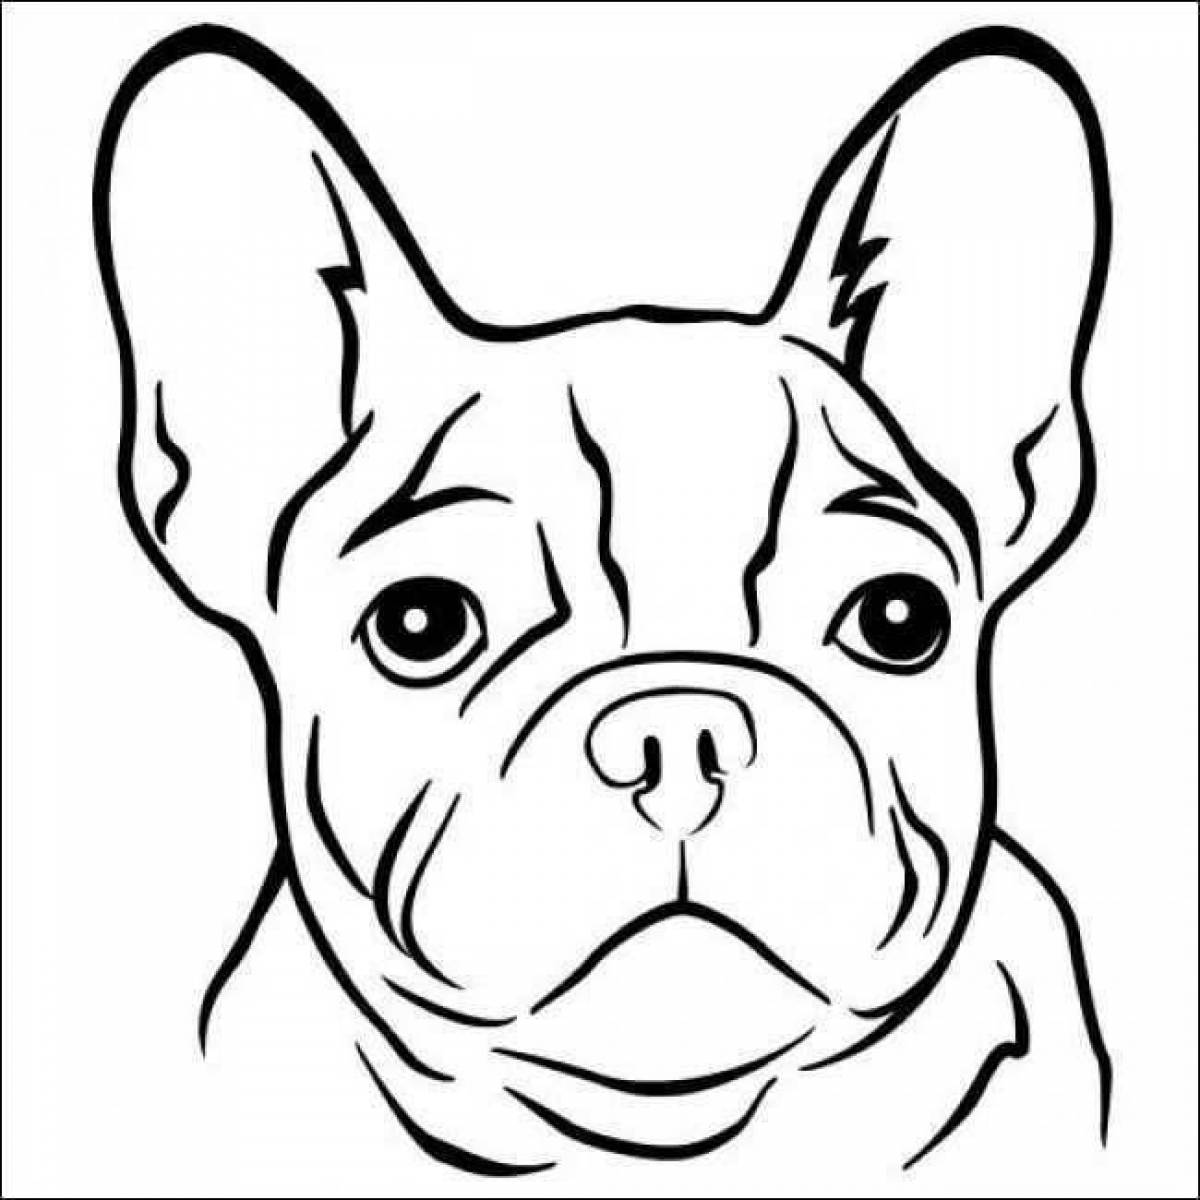 Coloring book smart french bulldog